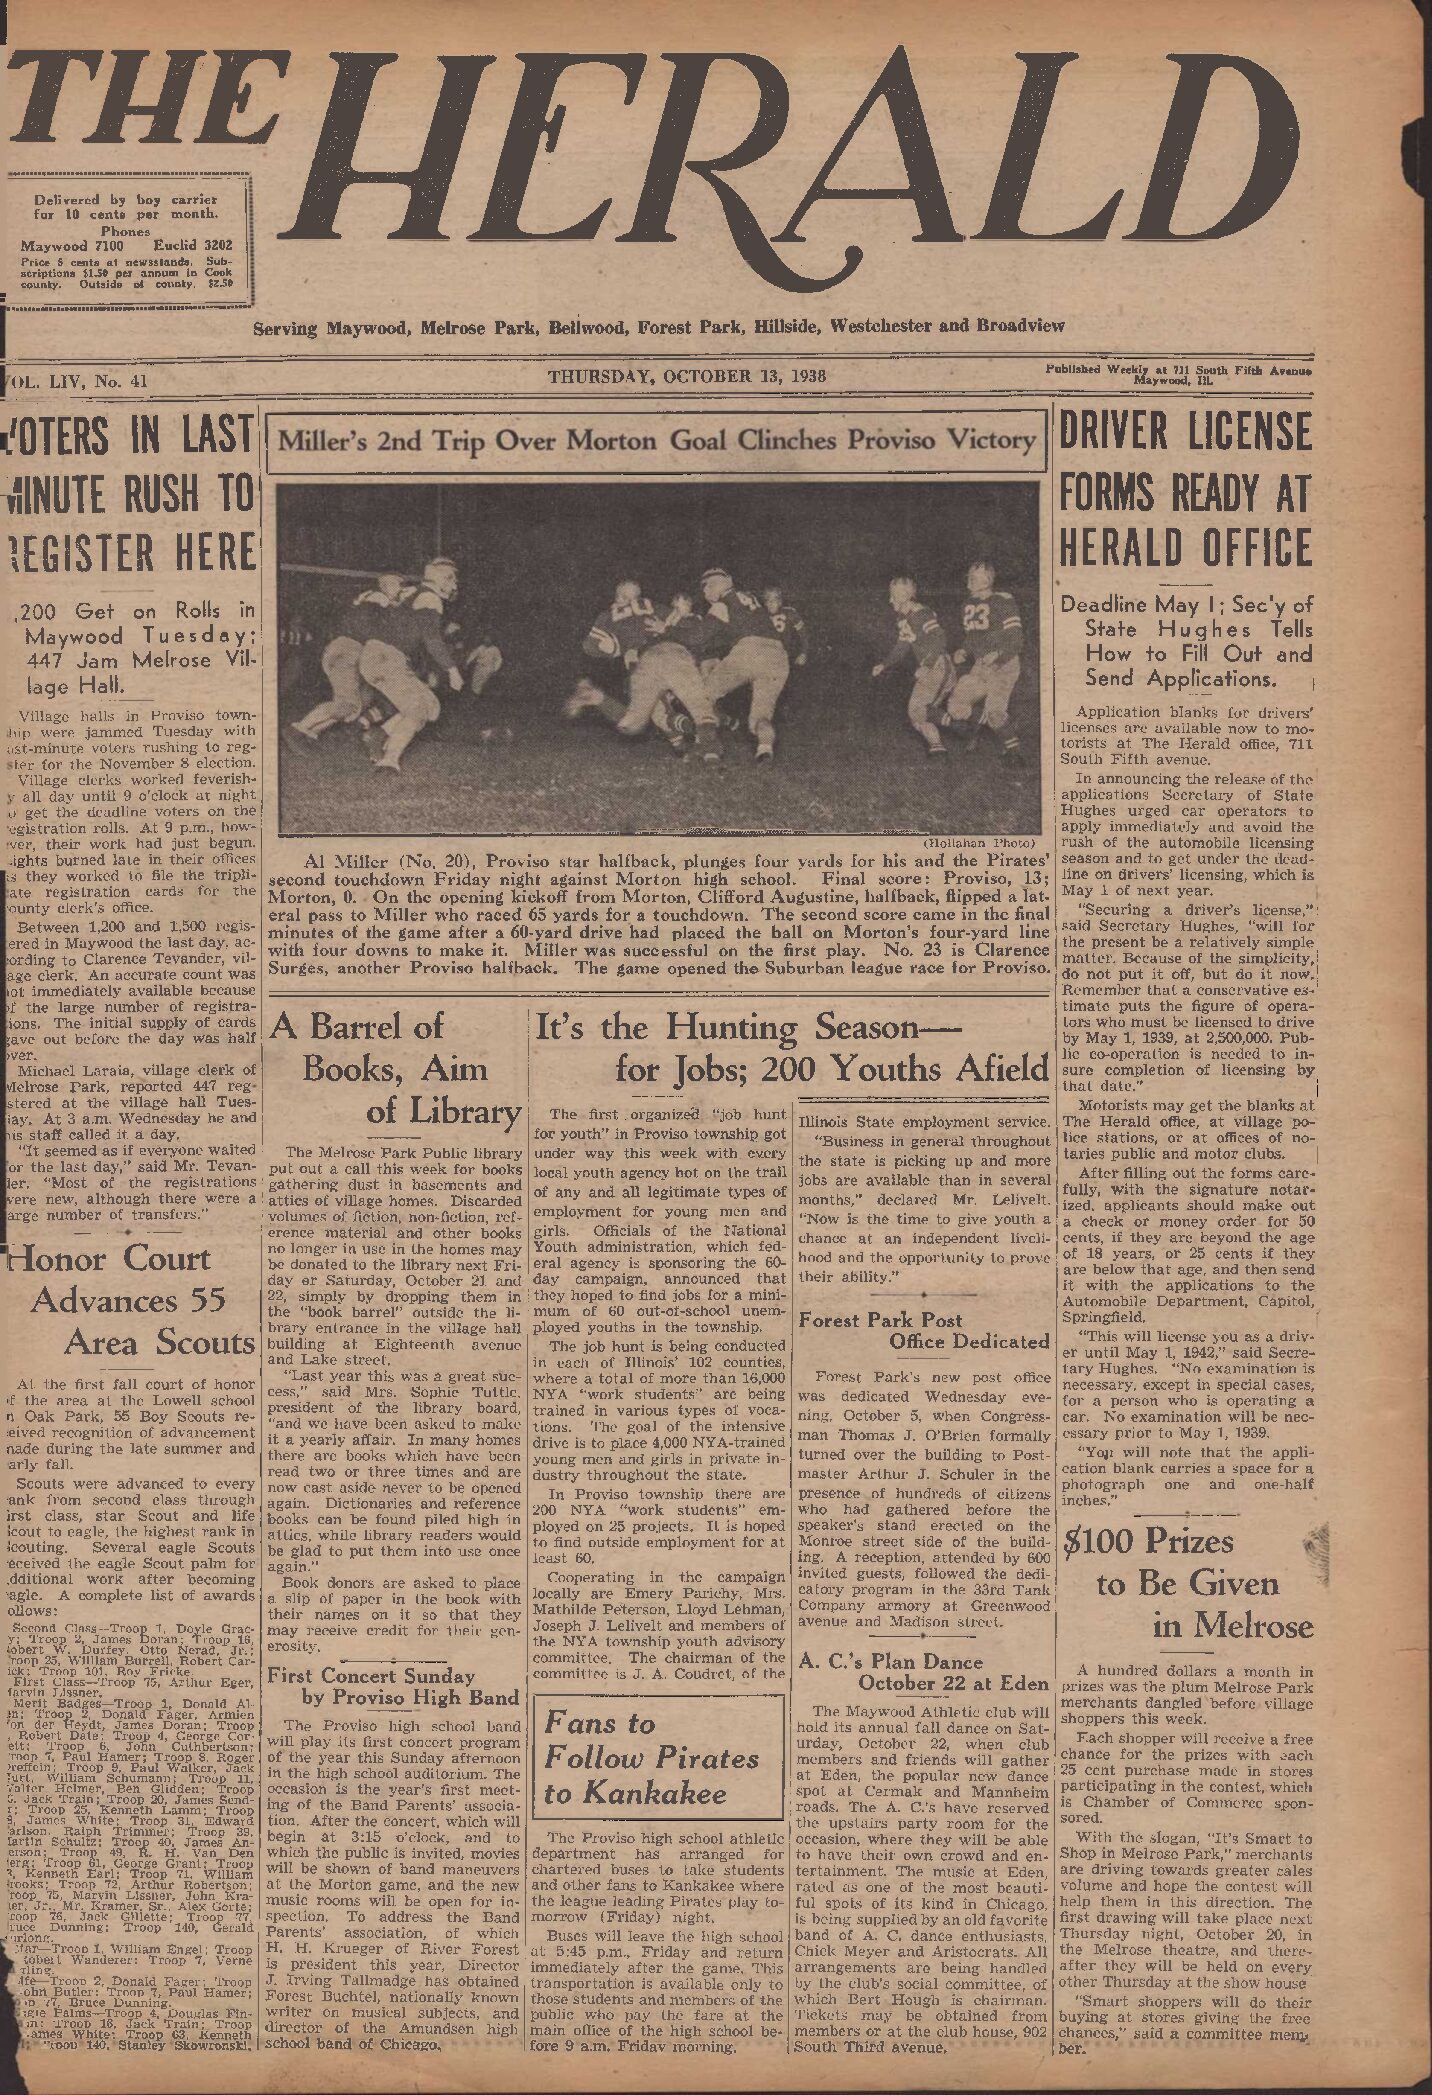 The Herald – 19381013